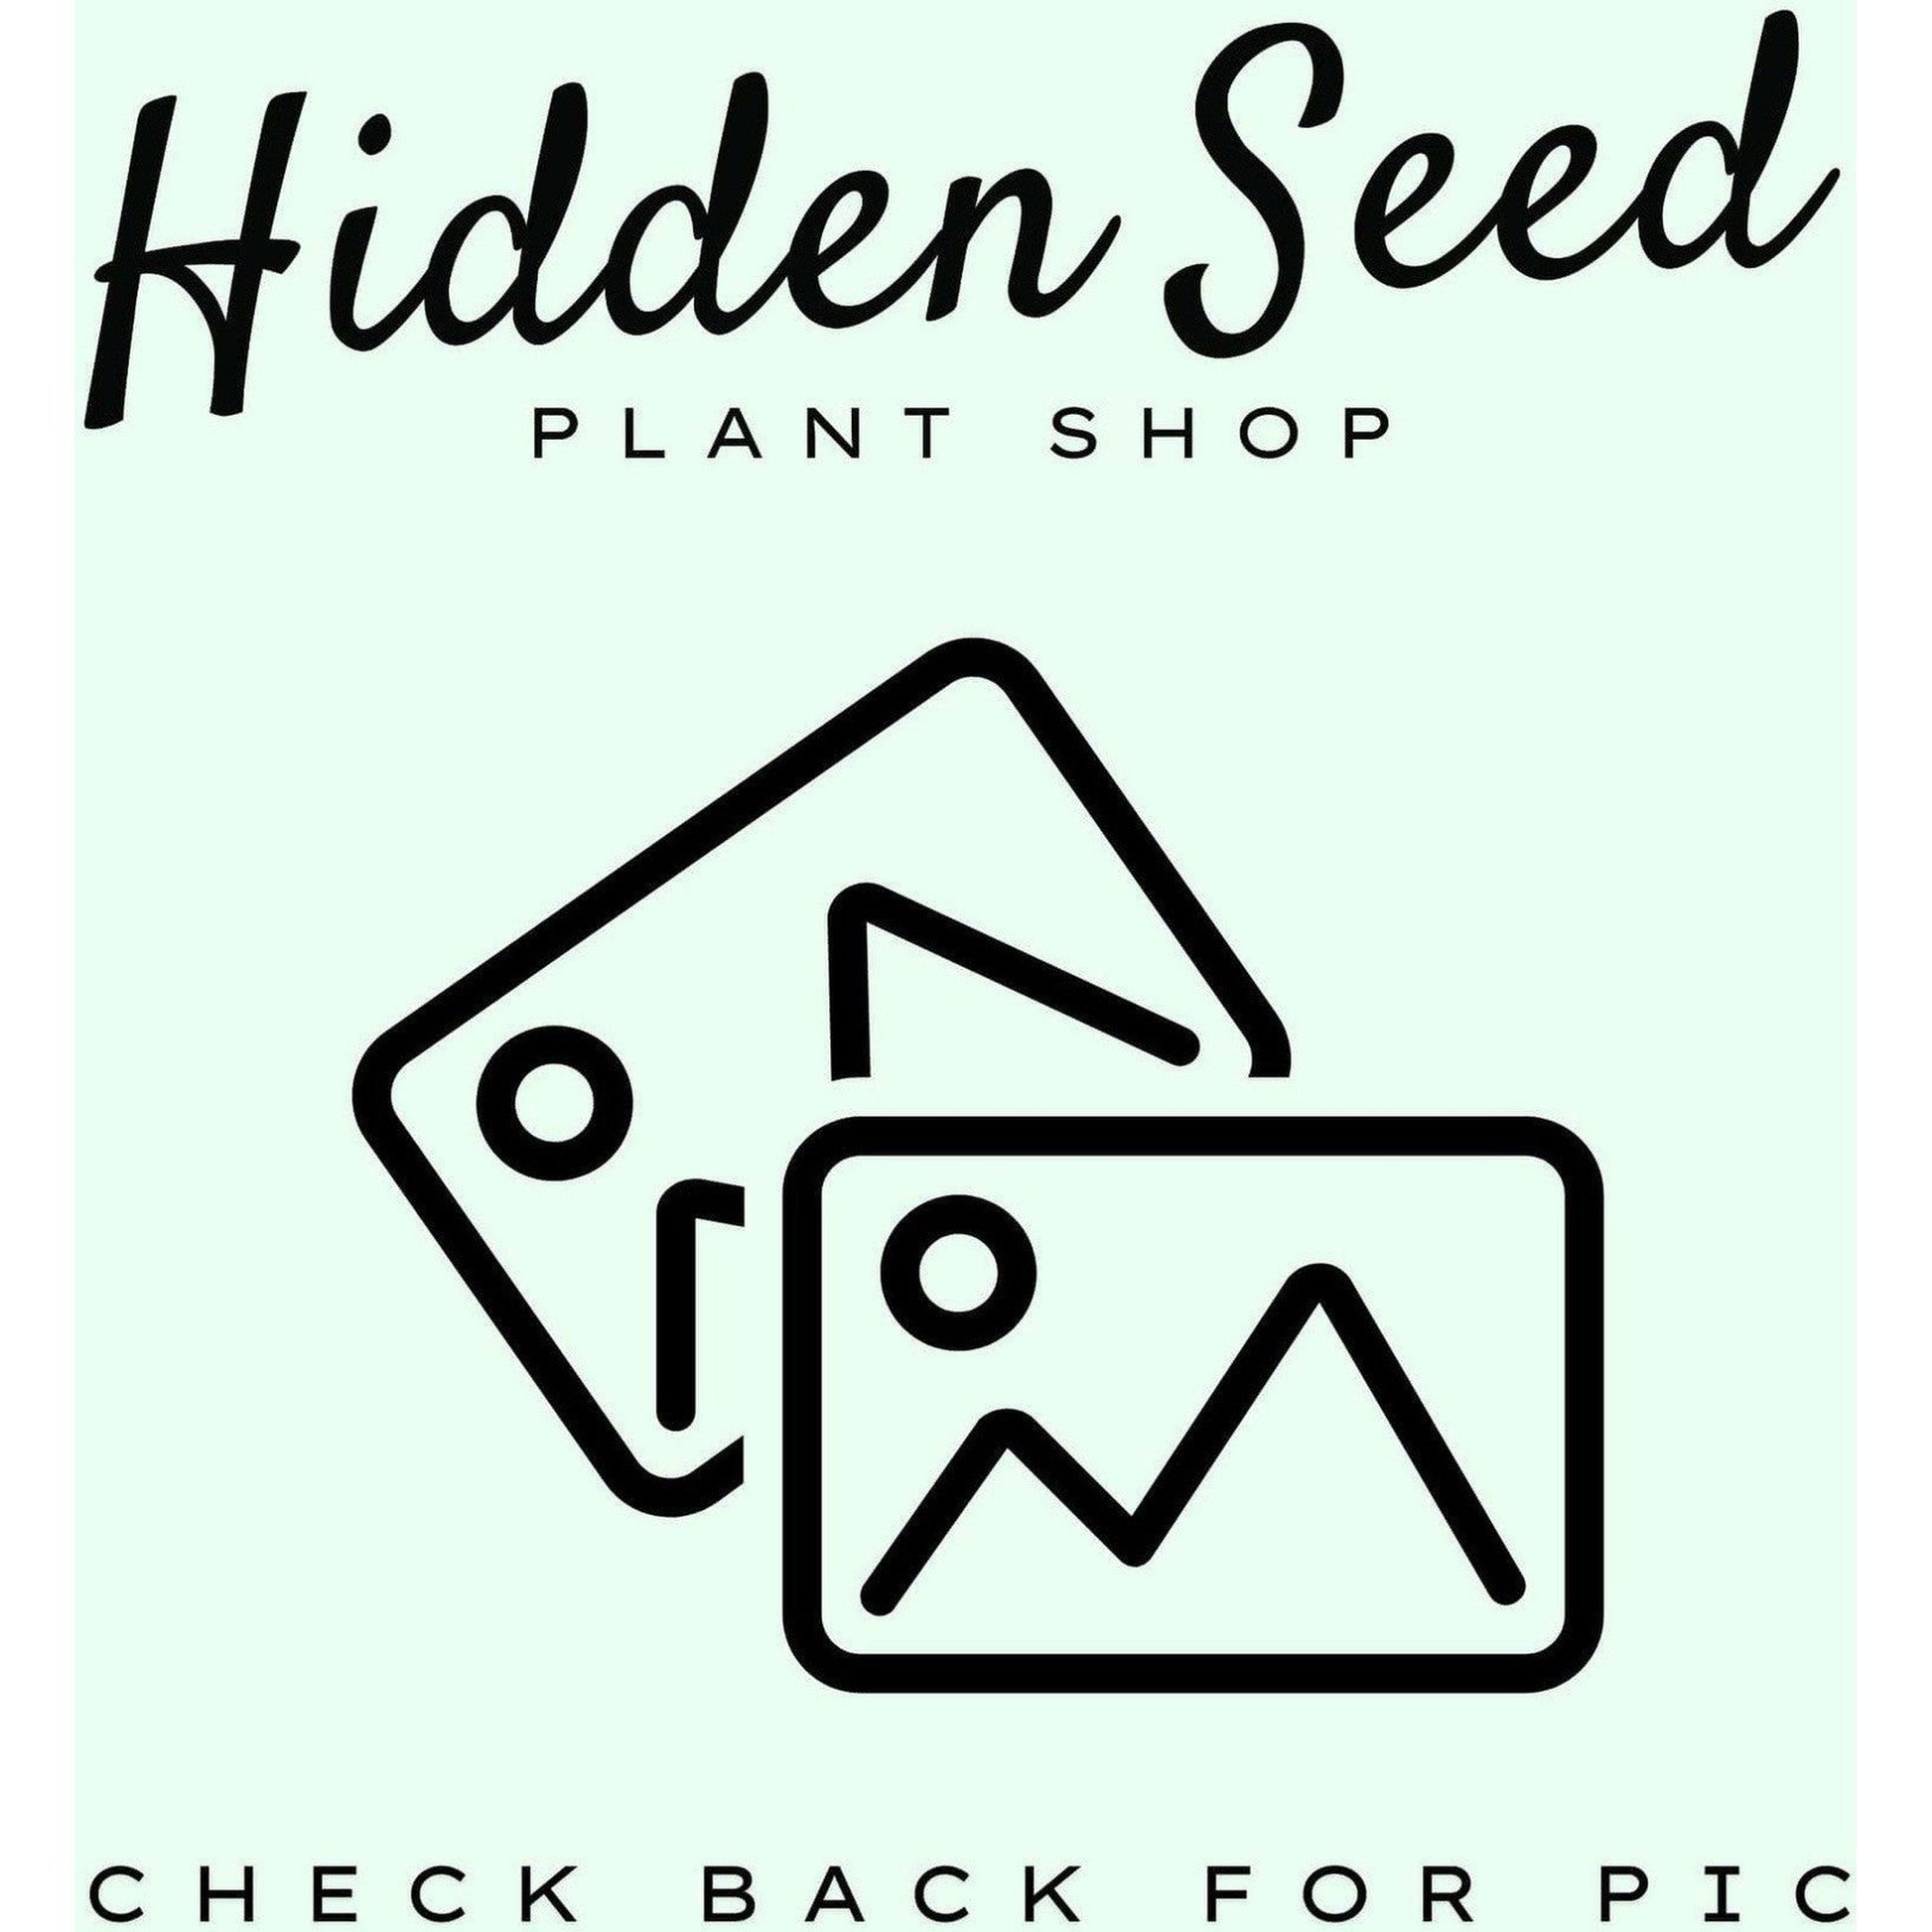 Hoya 'Sunrise'-available at Hidden Seed Plant Shop